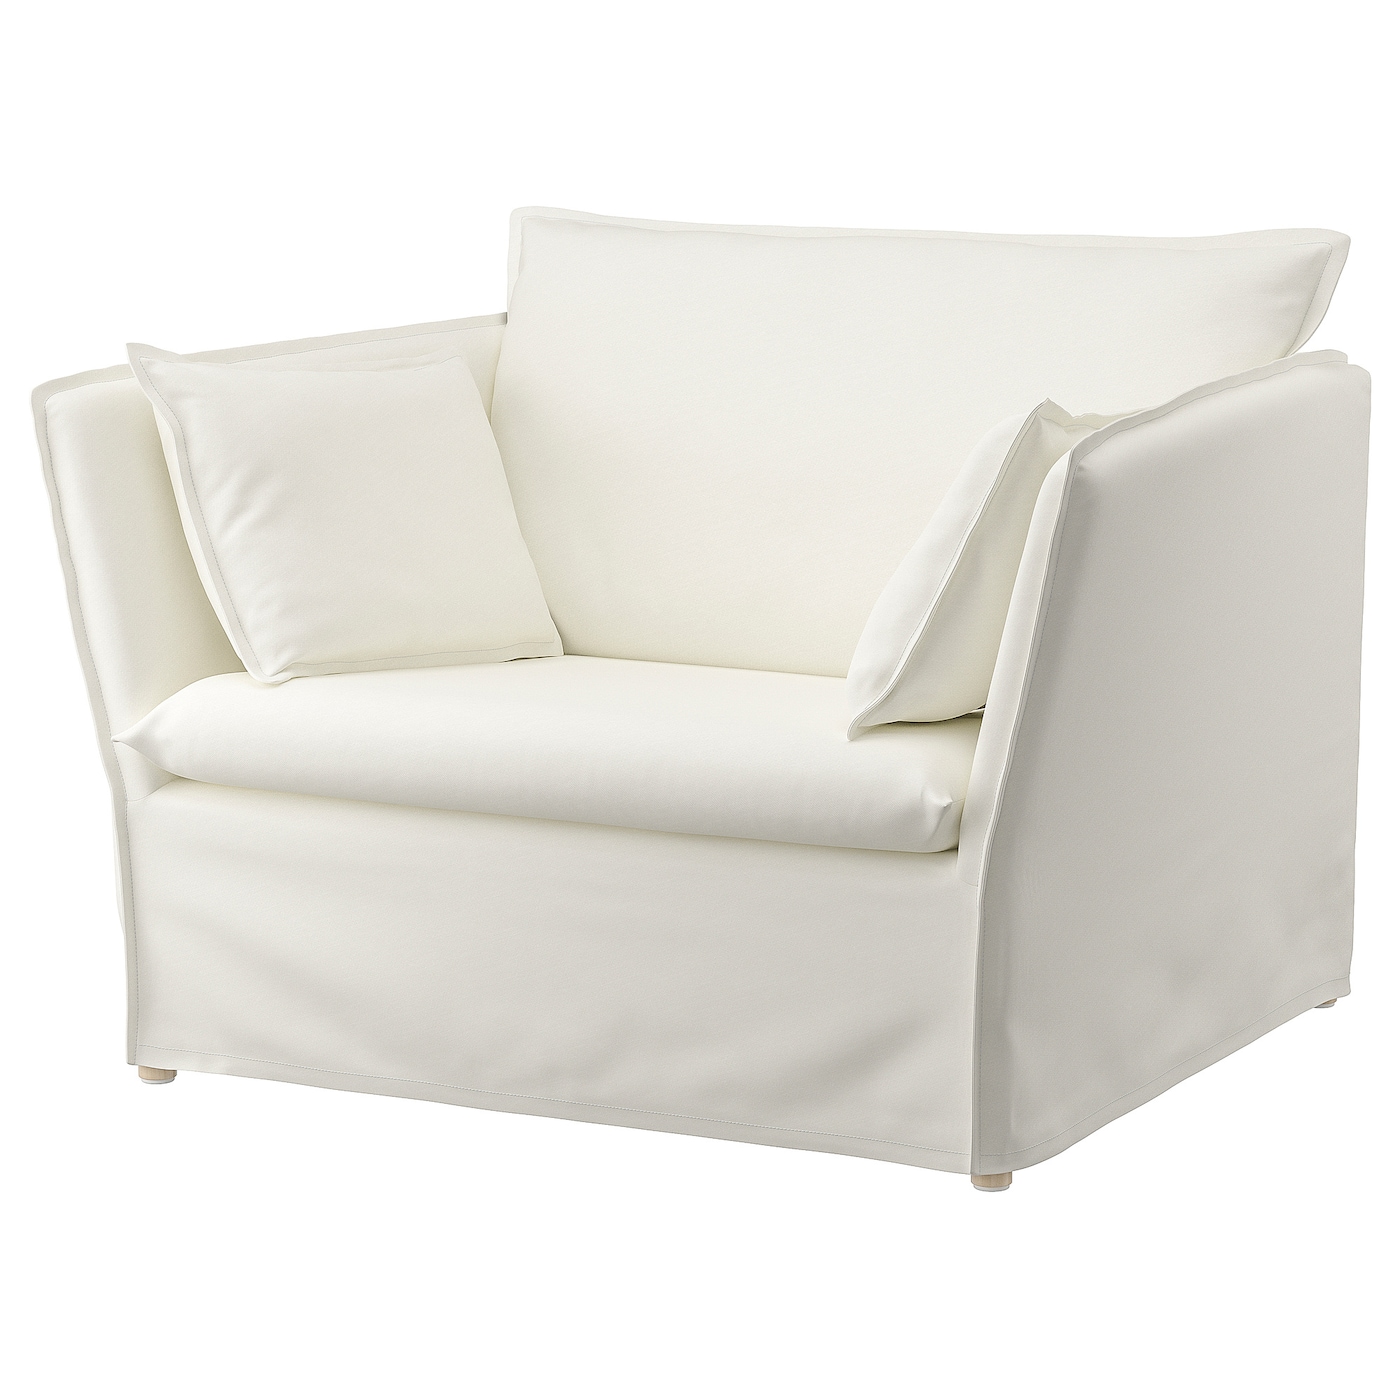 Кресло - IKEA BACKSÄLEN/BACKSALEN, 115х94х85 см, белый,  БАКСЭЛЕН ИКЕА